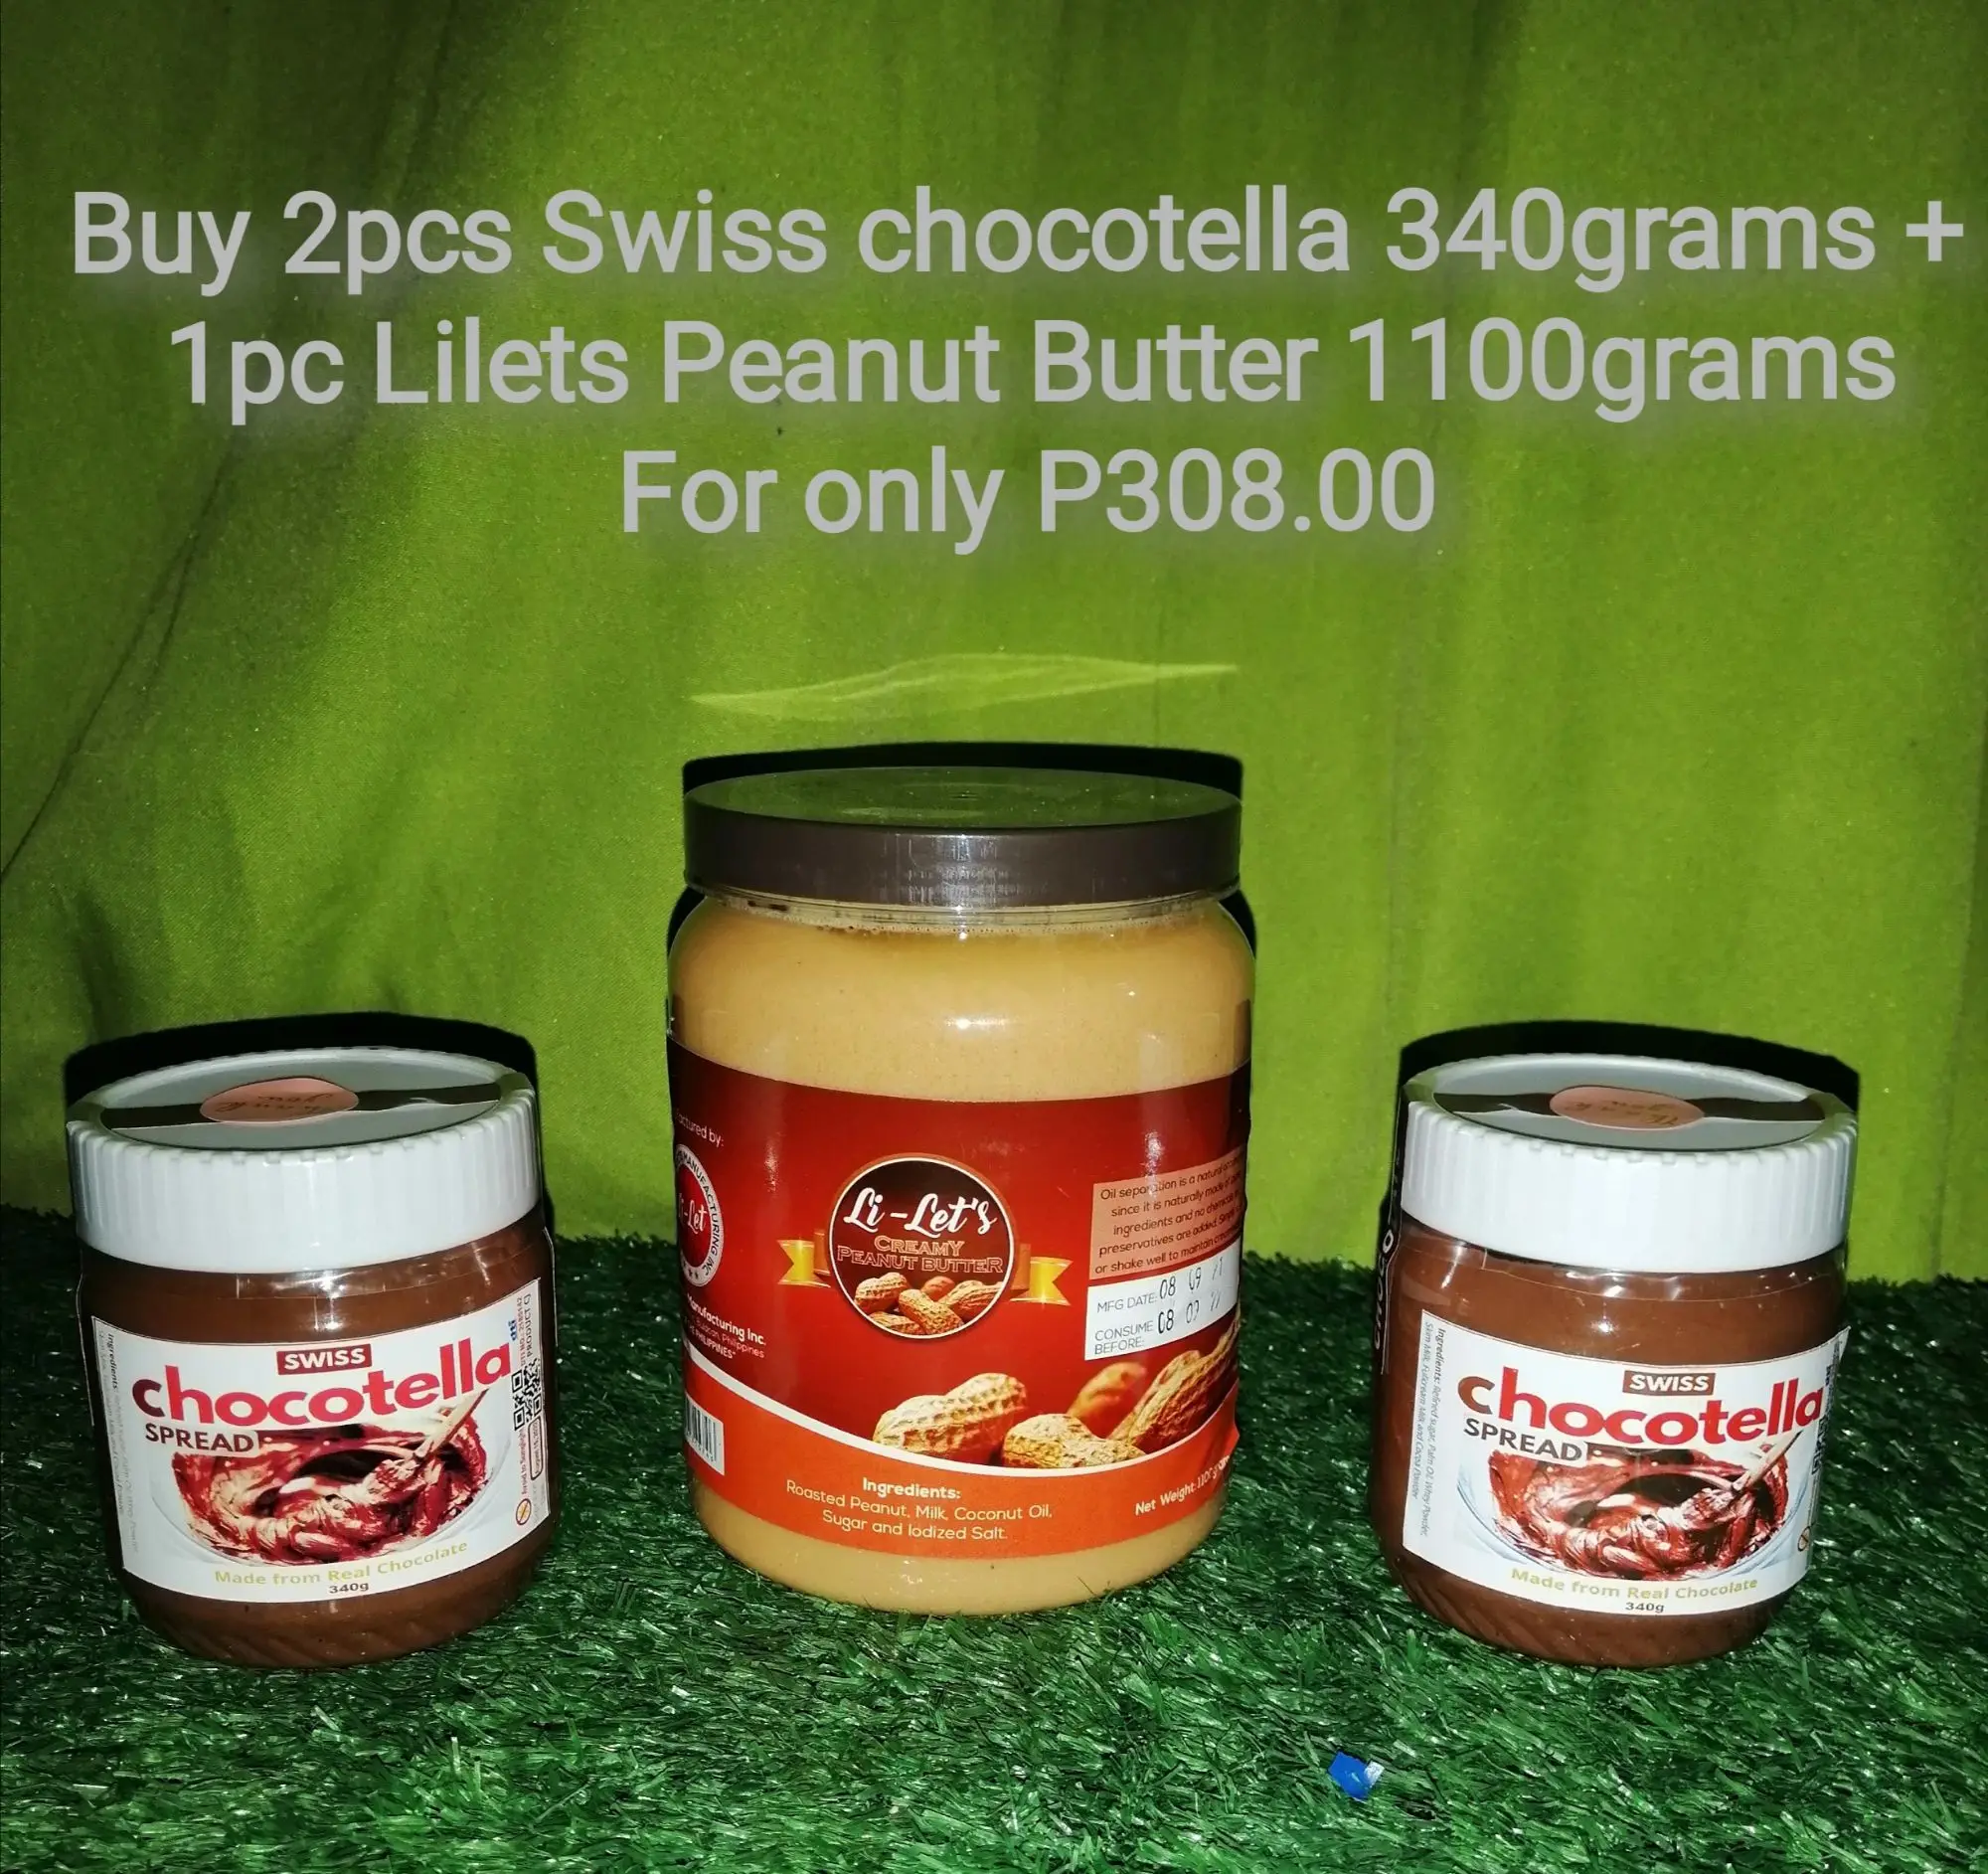 2 Swiss Chocotella 340grams + 1 Lilets Peanut Butter 1100grams